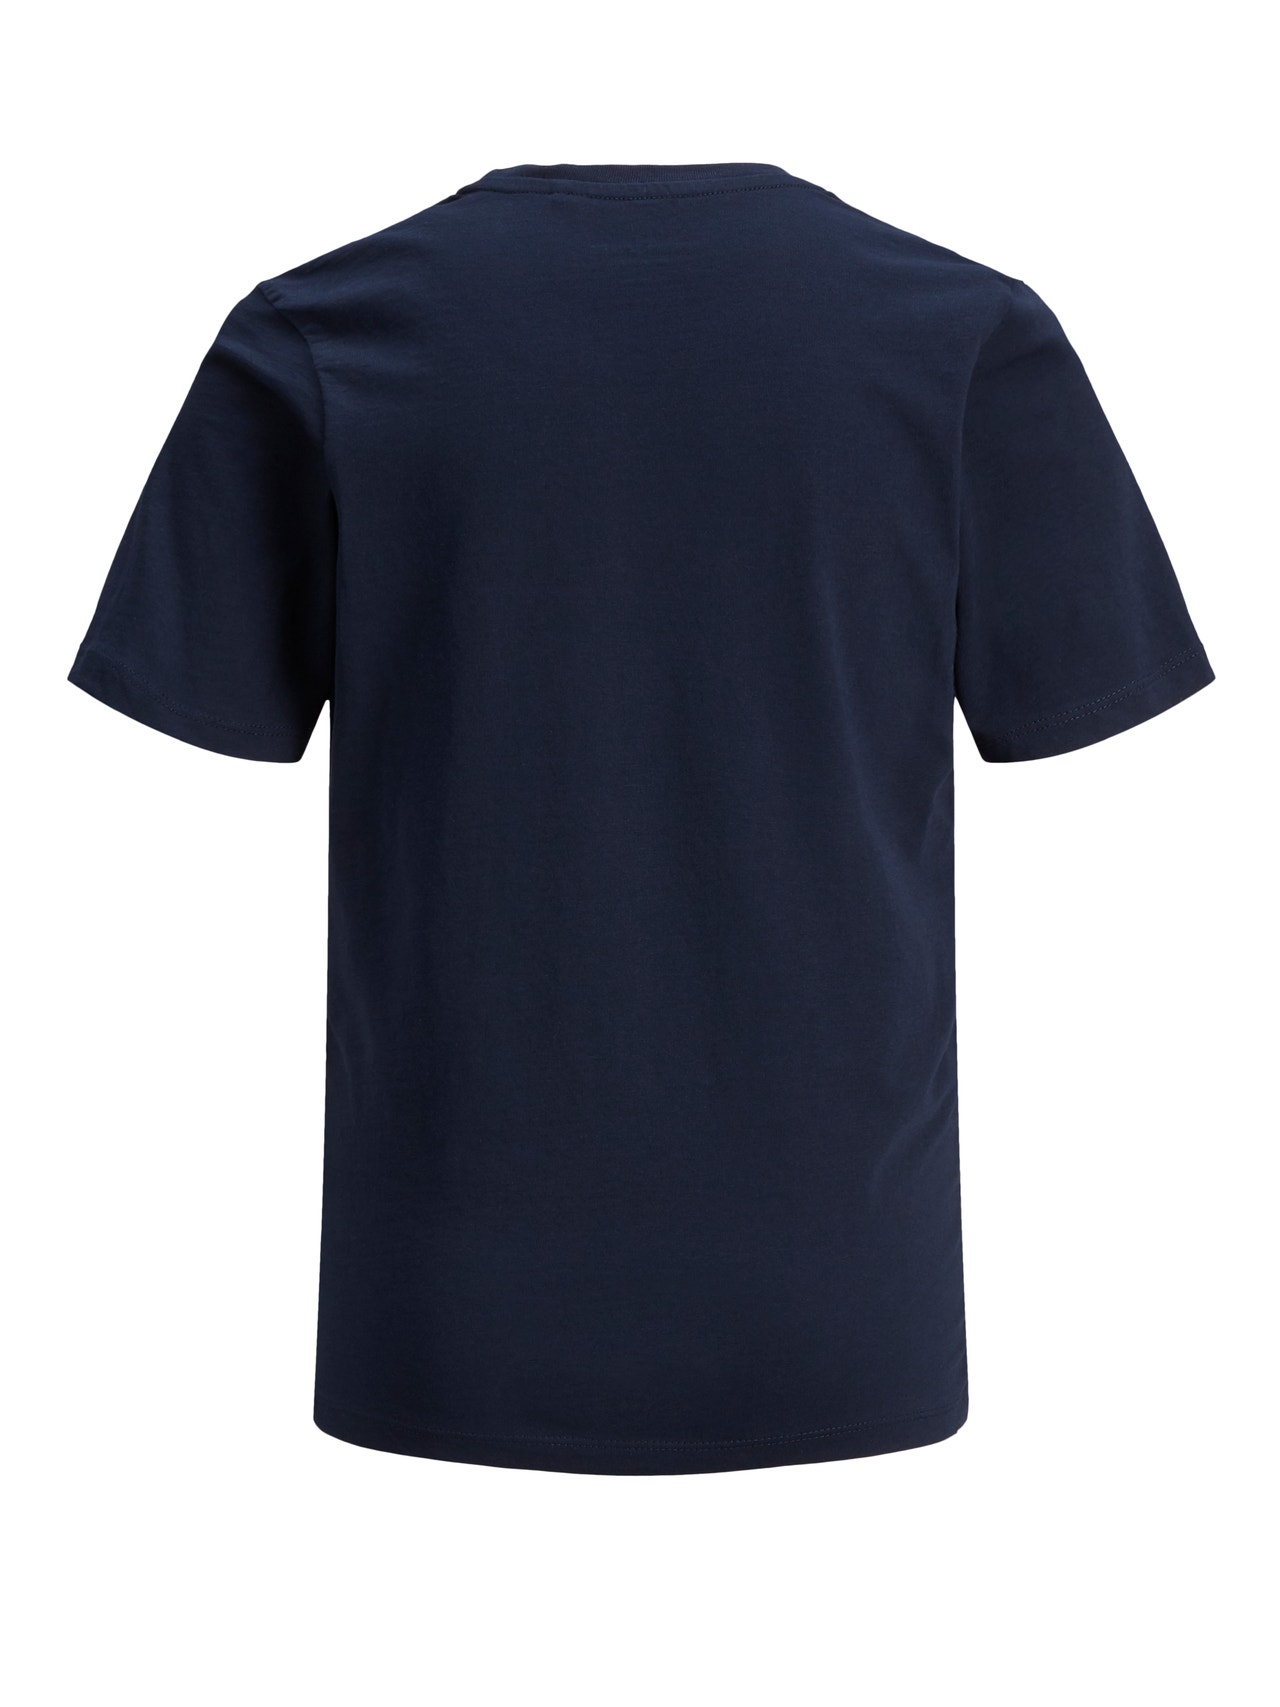 Jack & Jones T-shirt Logo Pour les garçons -Navy Blazer - 12152730